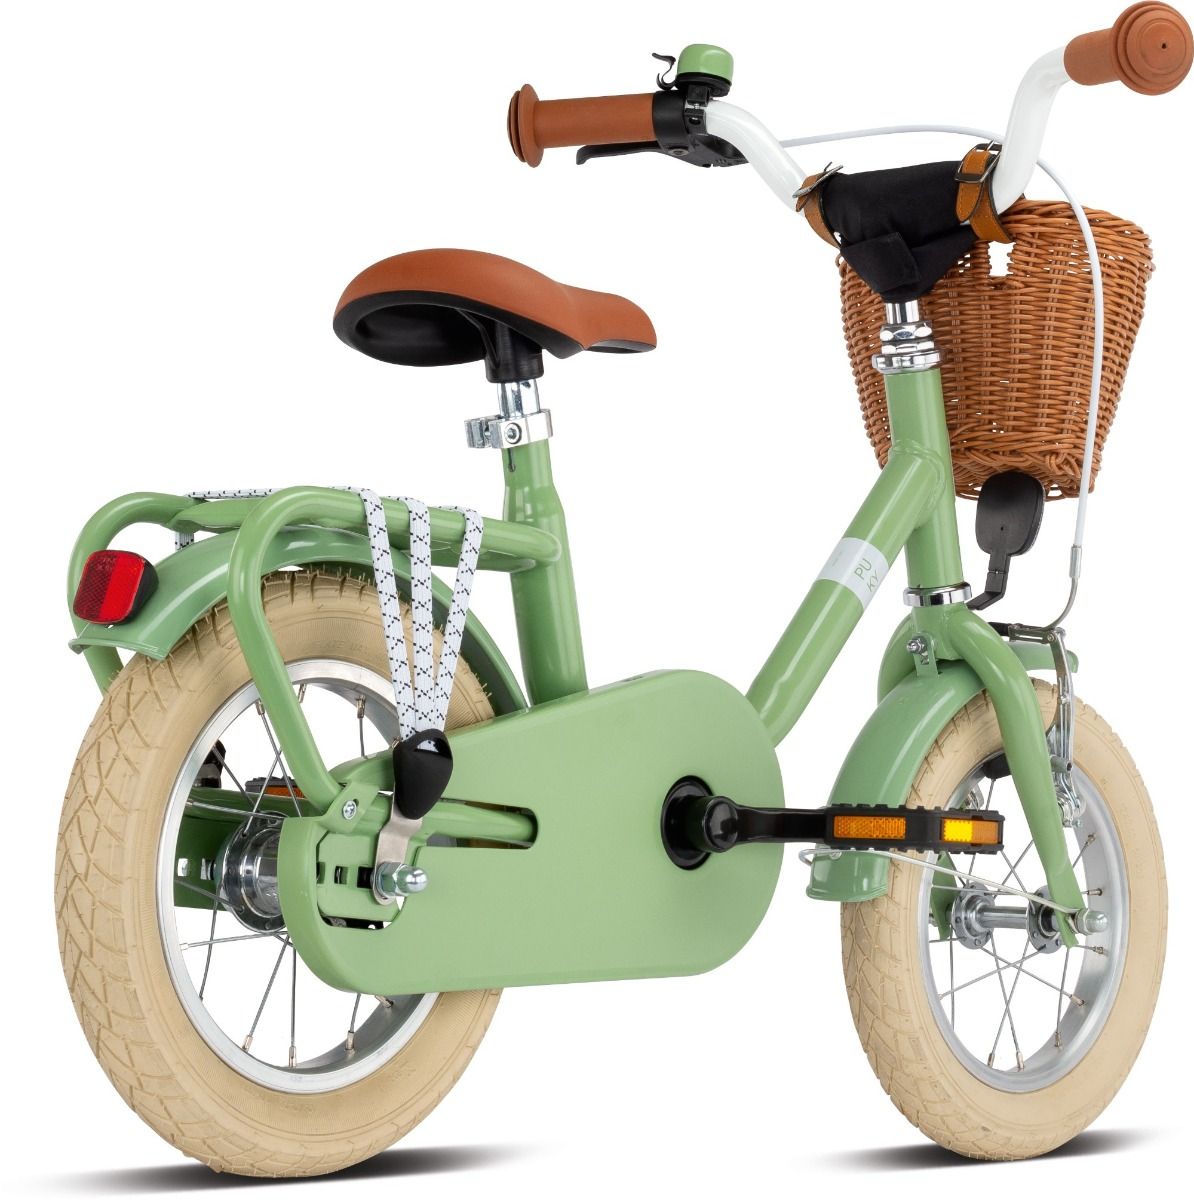 Puky STEEL CLASSIC 12 retro green - Fahrrad Online Shop